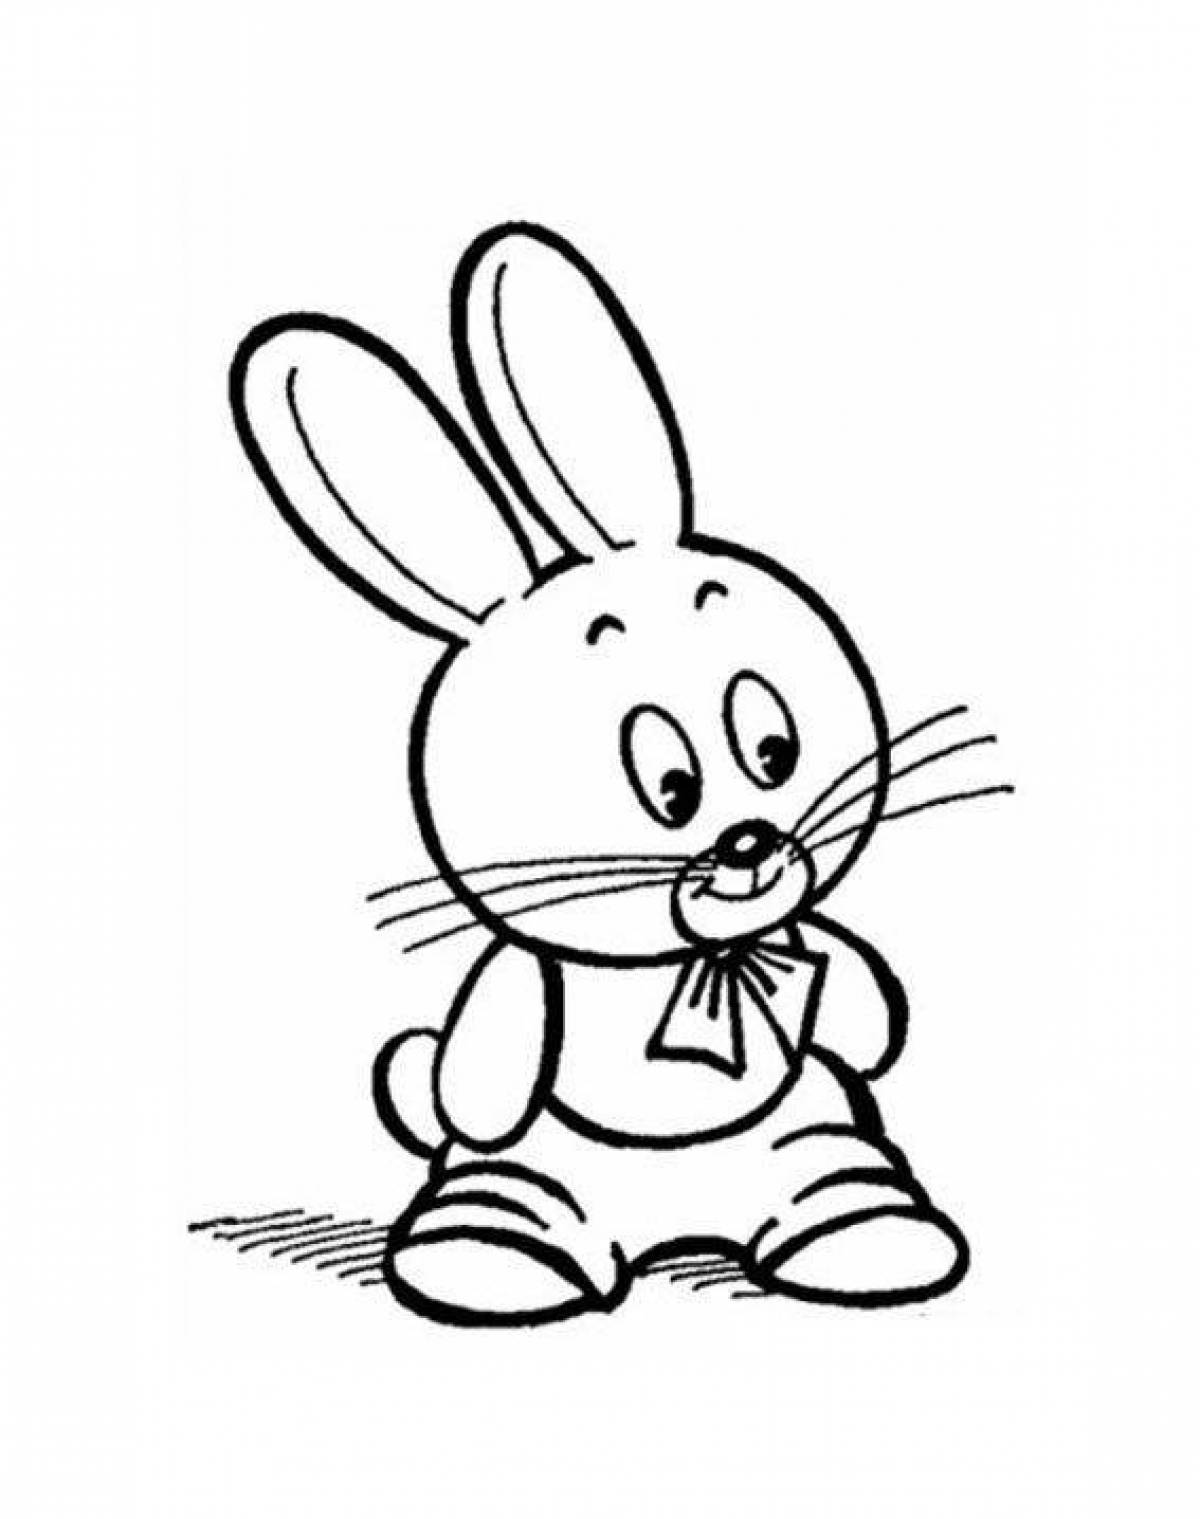 Prancing Bunny coloring page